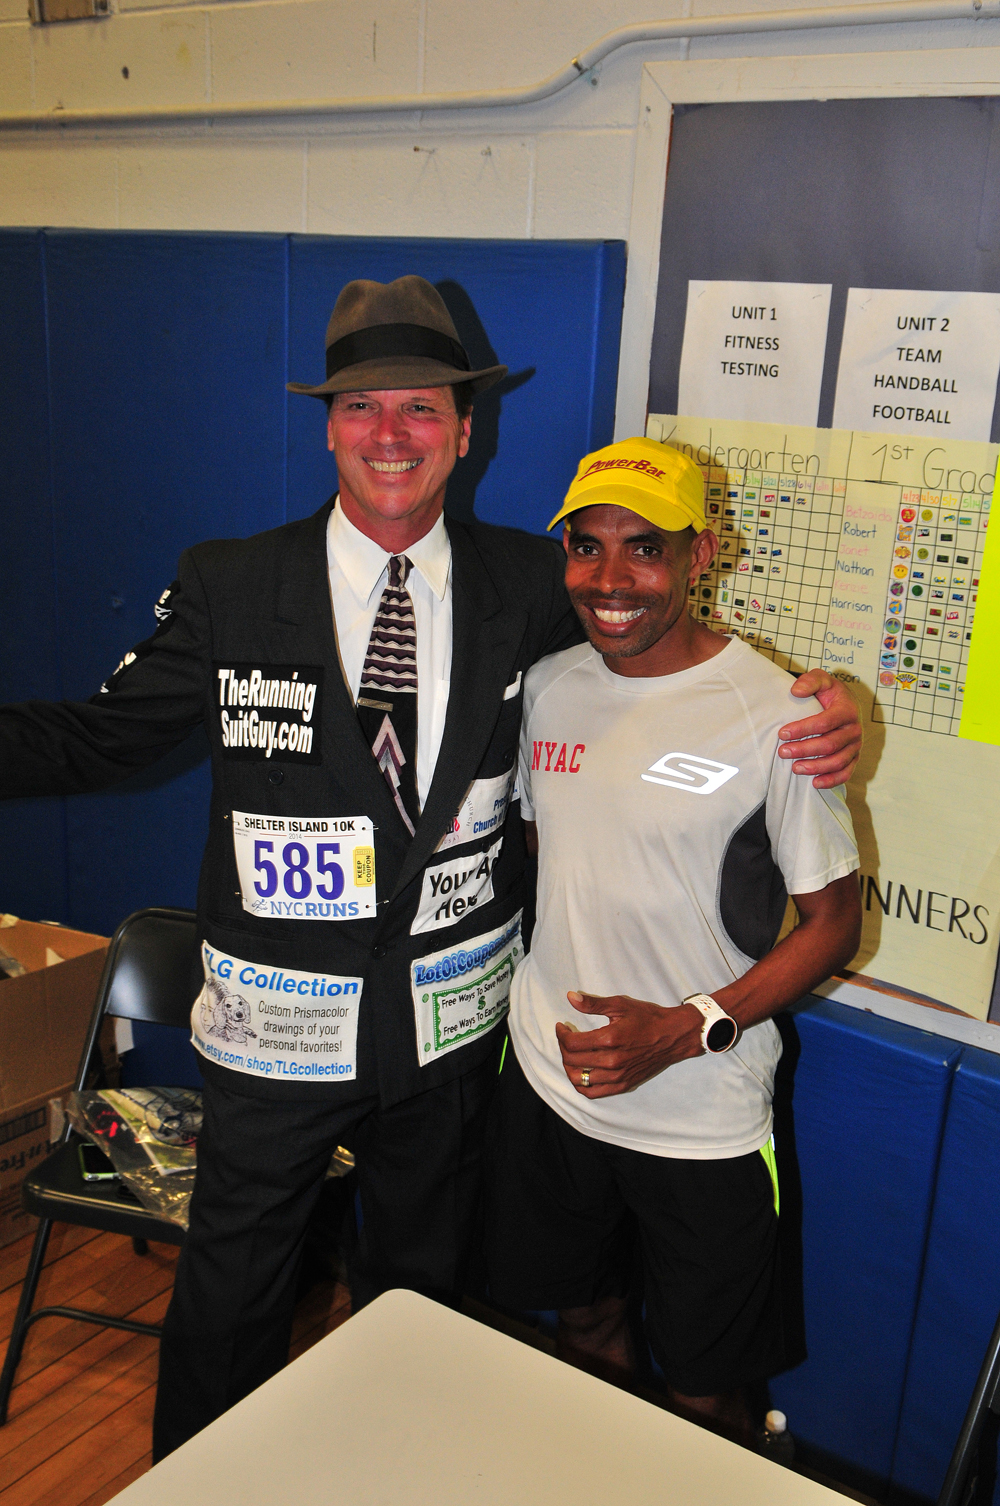 Boston Marathon winner Meb Keflezighi won a silver medal in the 2004 Olympics in Athens, Greece. (Credit: Bill Landon)